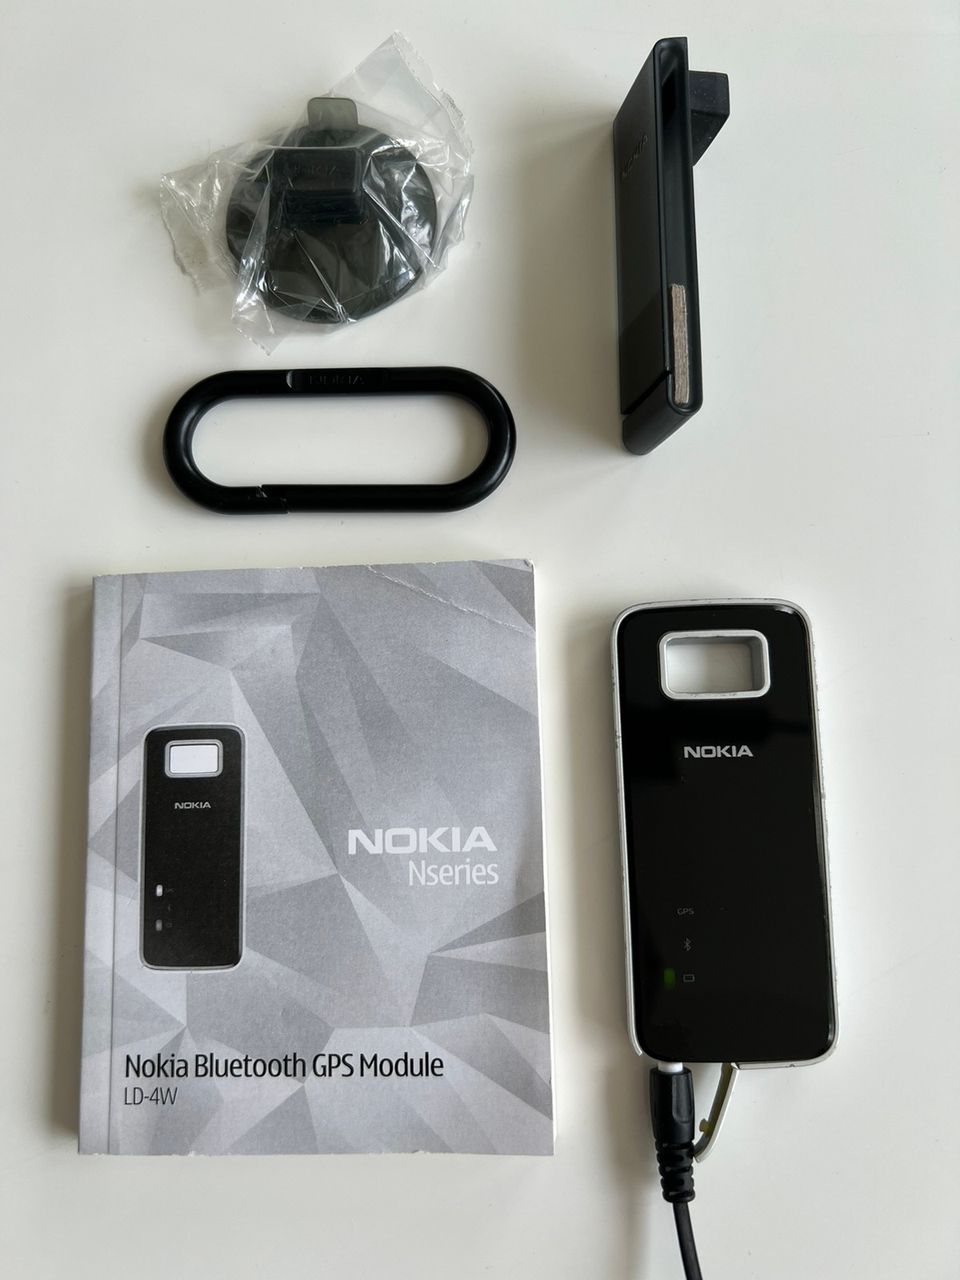 Nokia Bluetooth GPS Moduli LD-4W